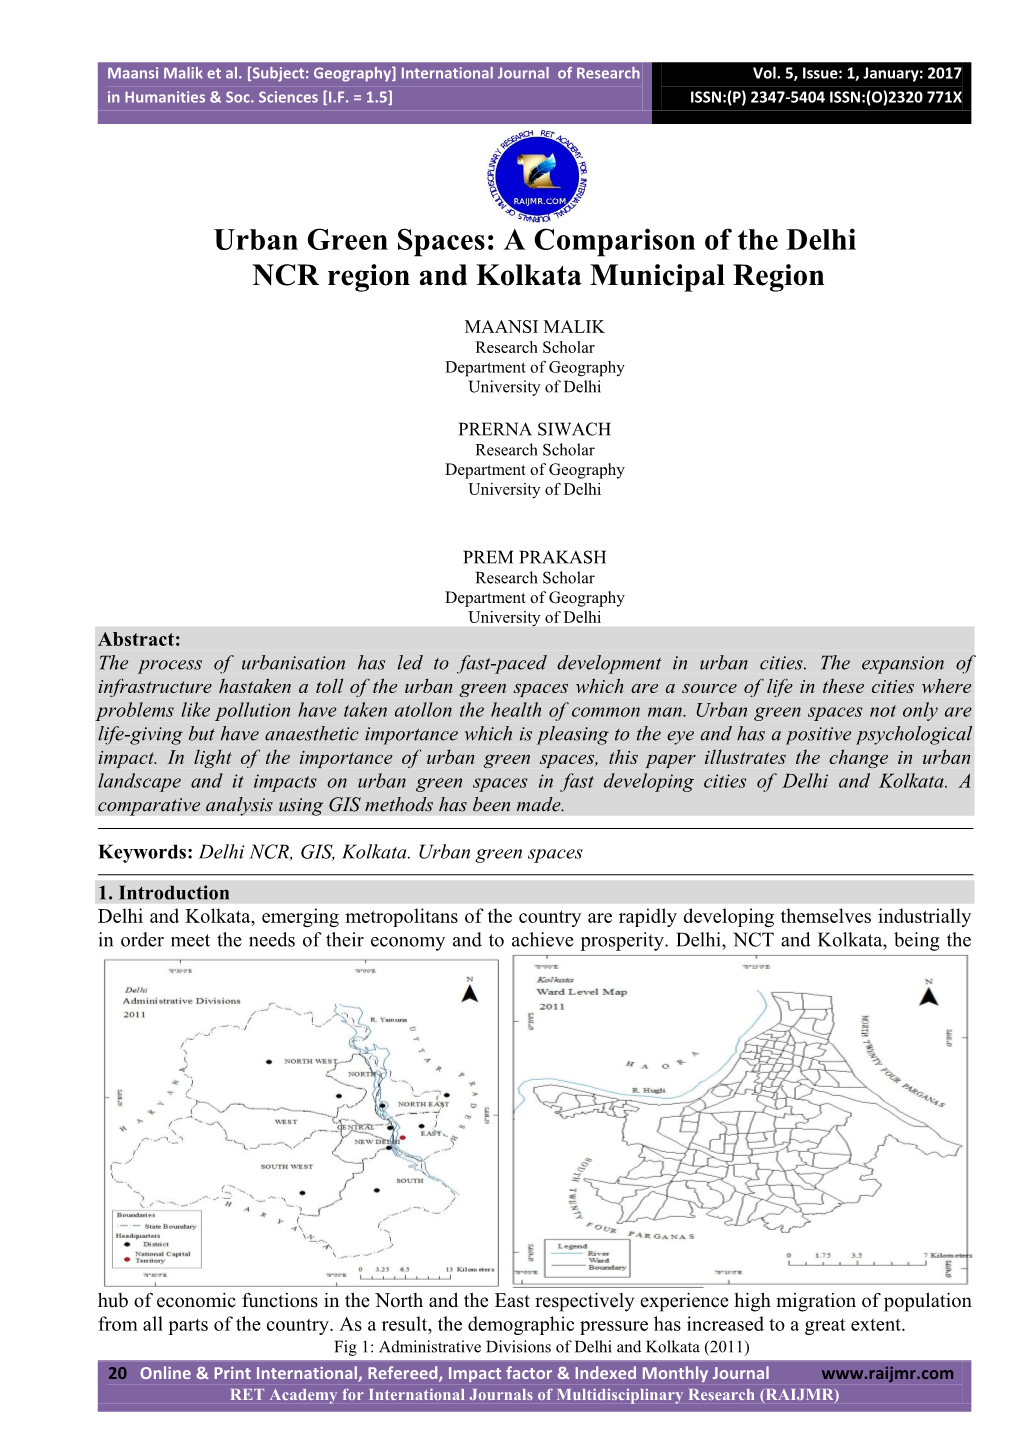 Urban Green Spaces: a Comparison of the Delhi NCR Region and Kolkata Municipal Region